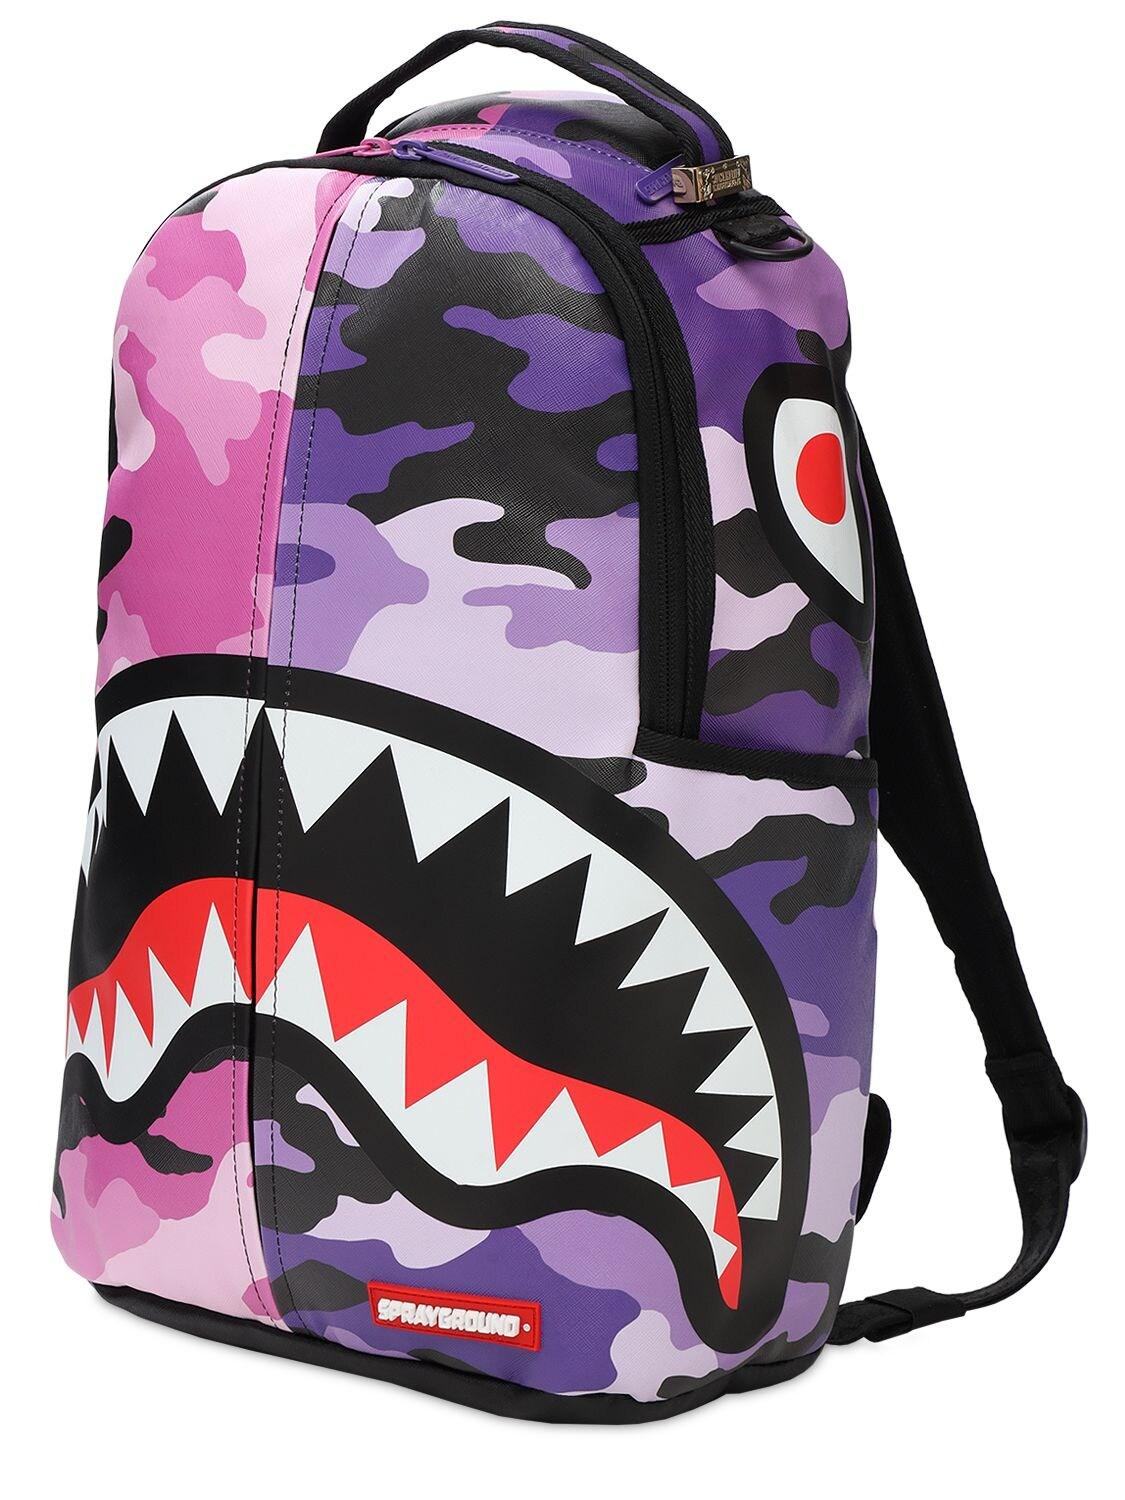 Shop Sprayground Split Sharkmouth Camo Backpack B3002 camo